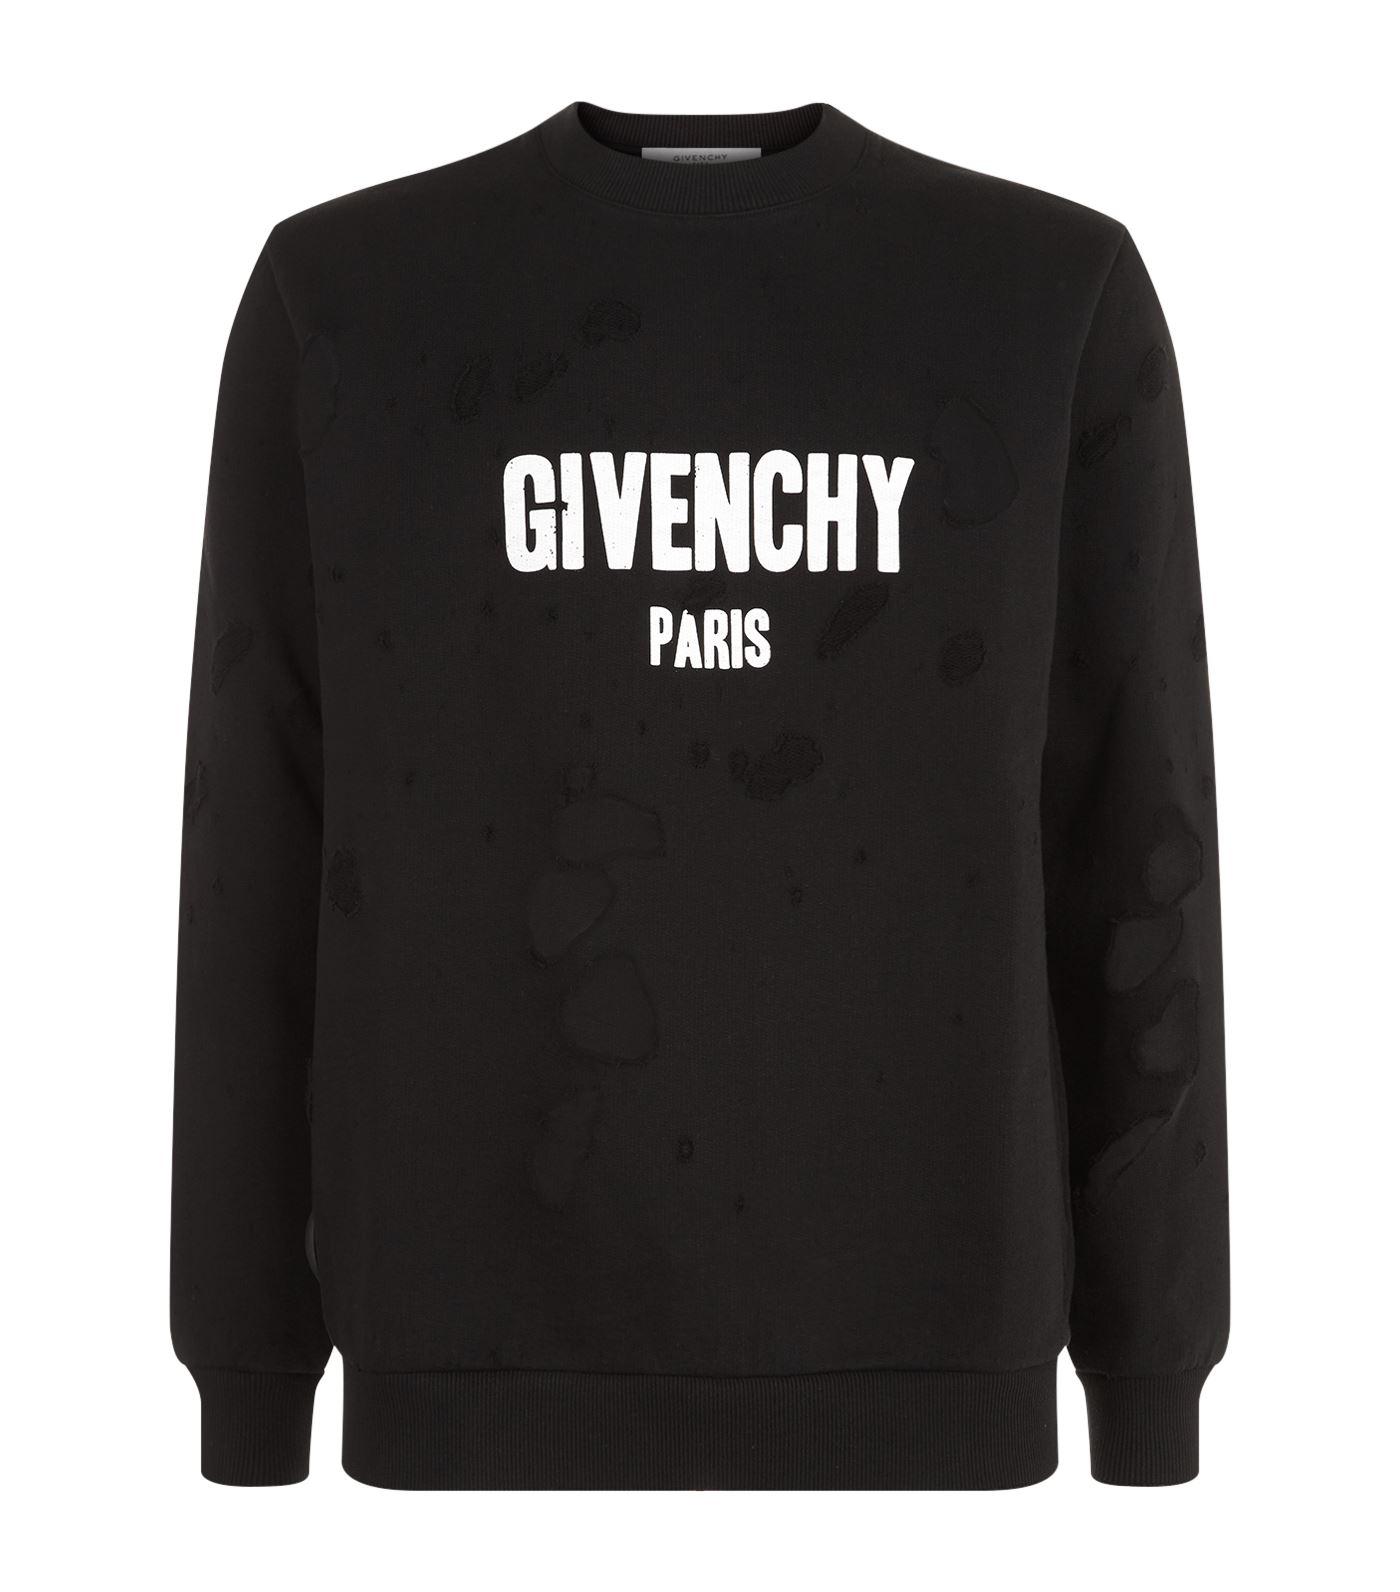 Lyst - Givenchy Destroyed Logo Sweatshirt in Black for Men